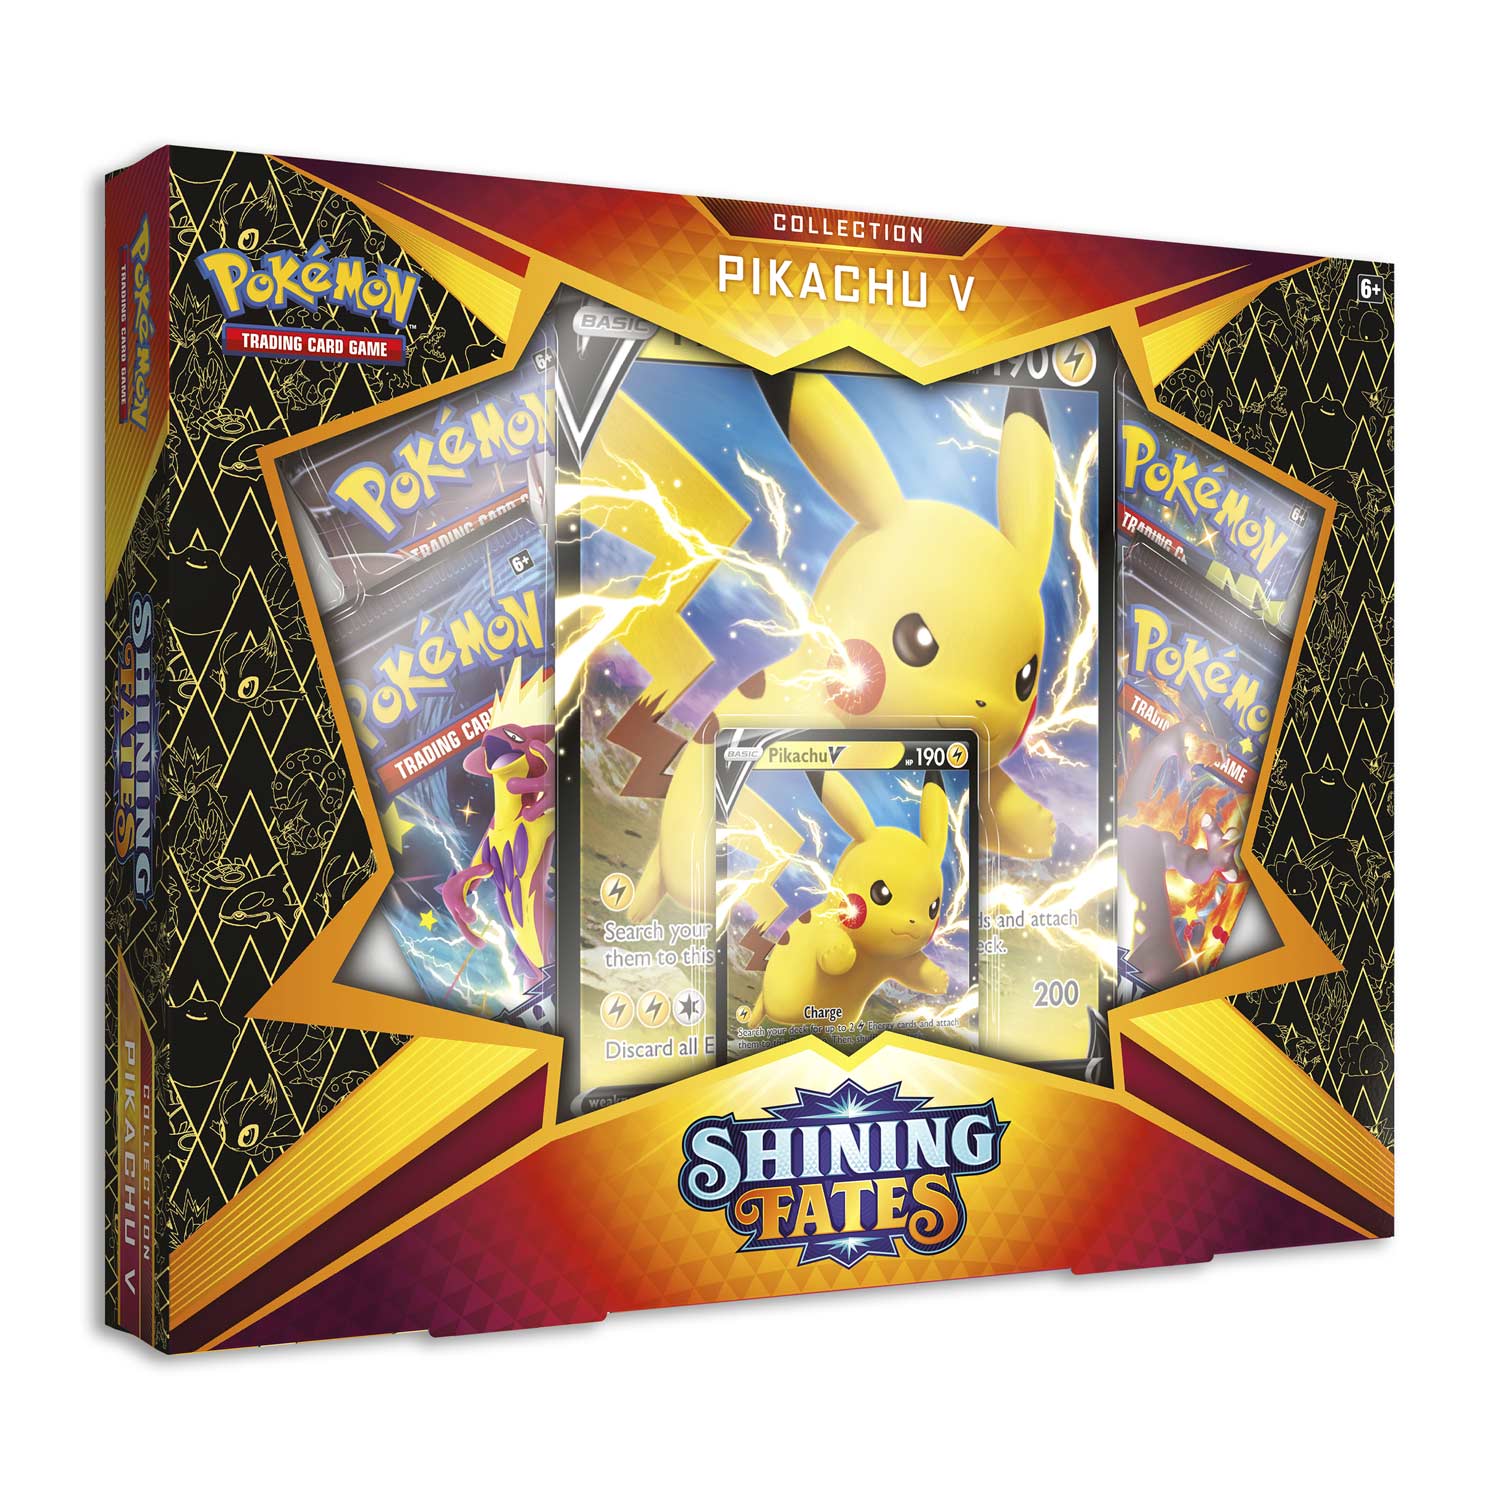 Pokemon TCG Shining Fates Pikachu V Box CollectionNEW4 booster packs 